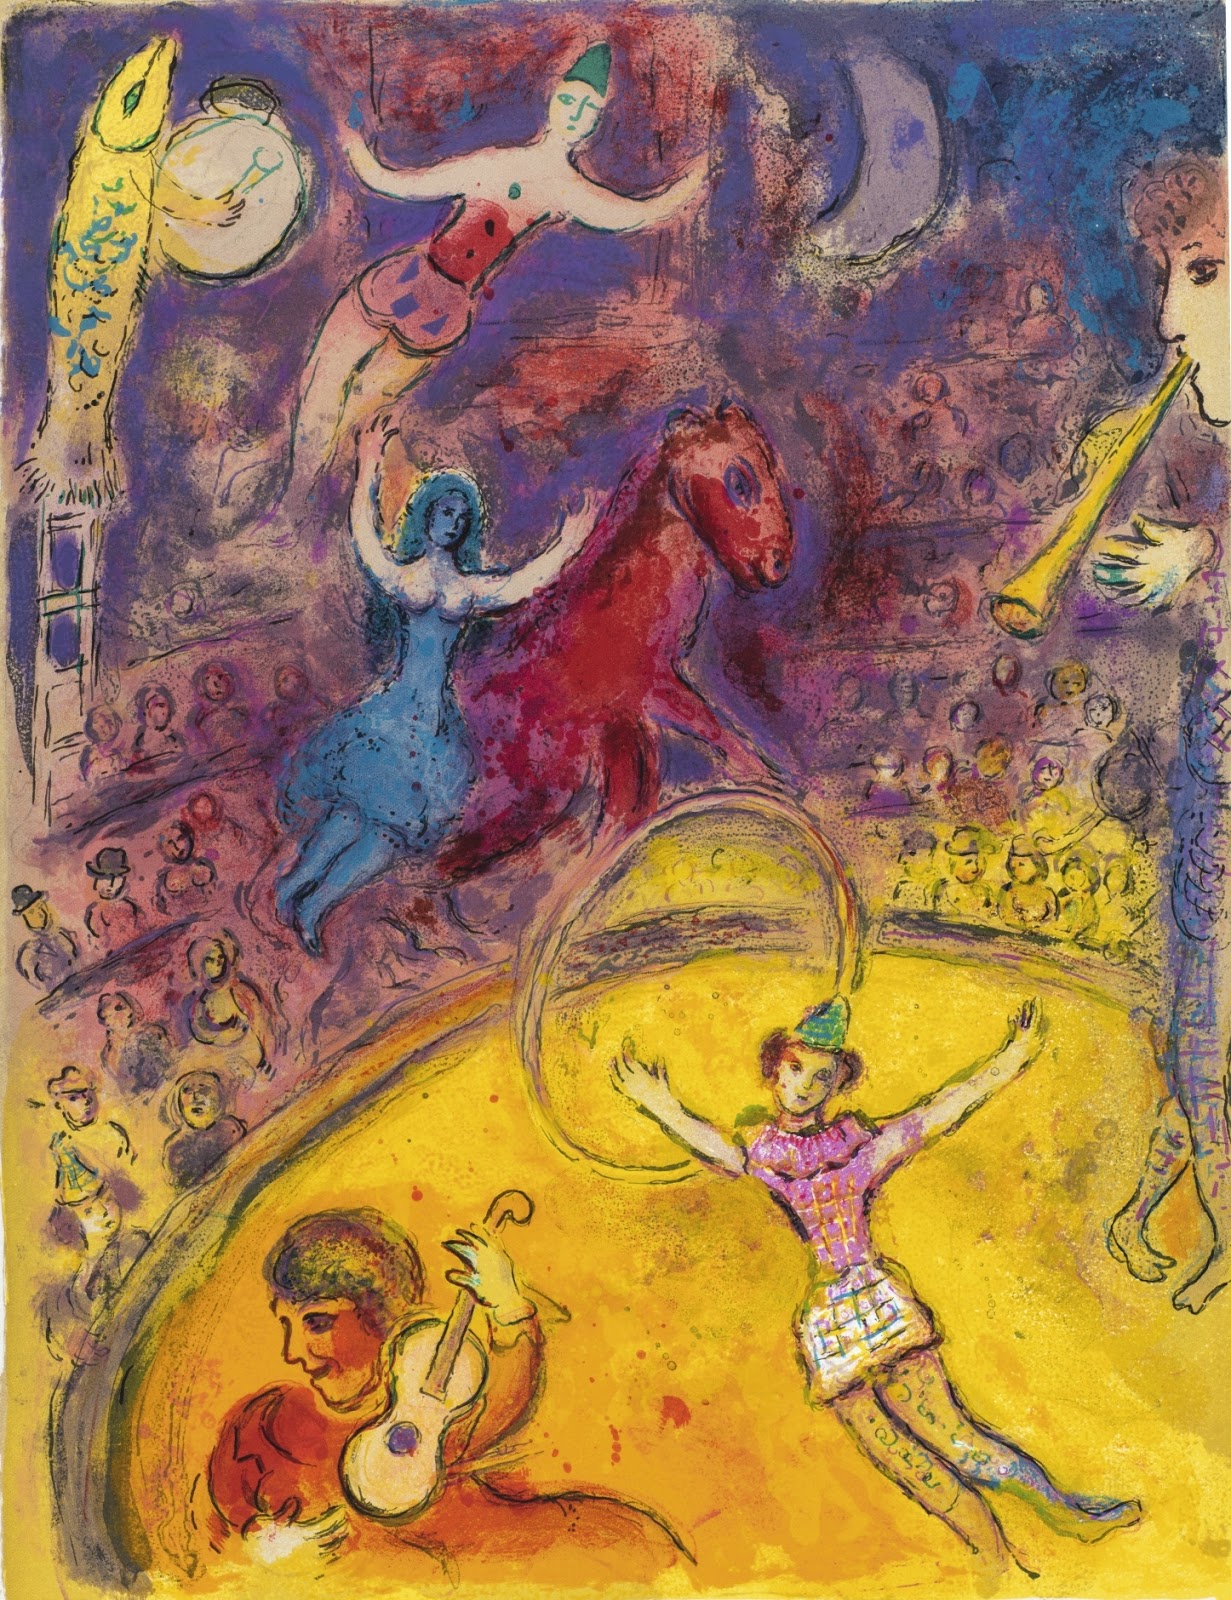 Marc+Chagall-1887-1985 (41).jpg